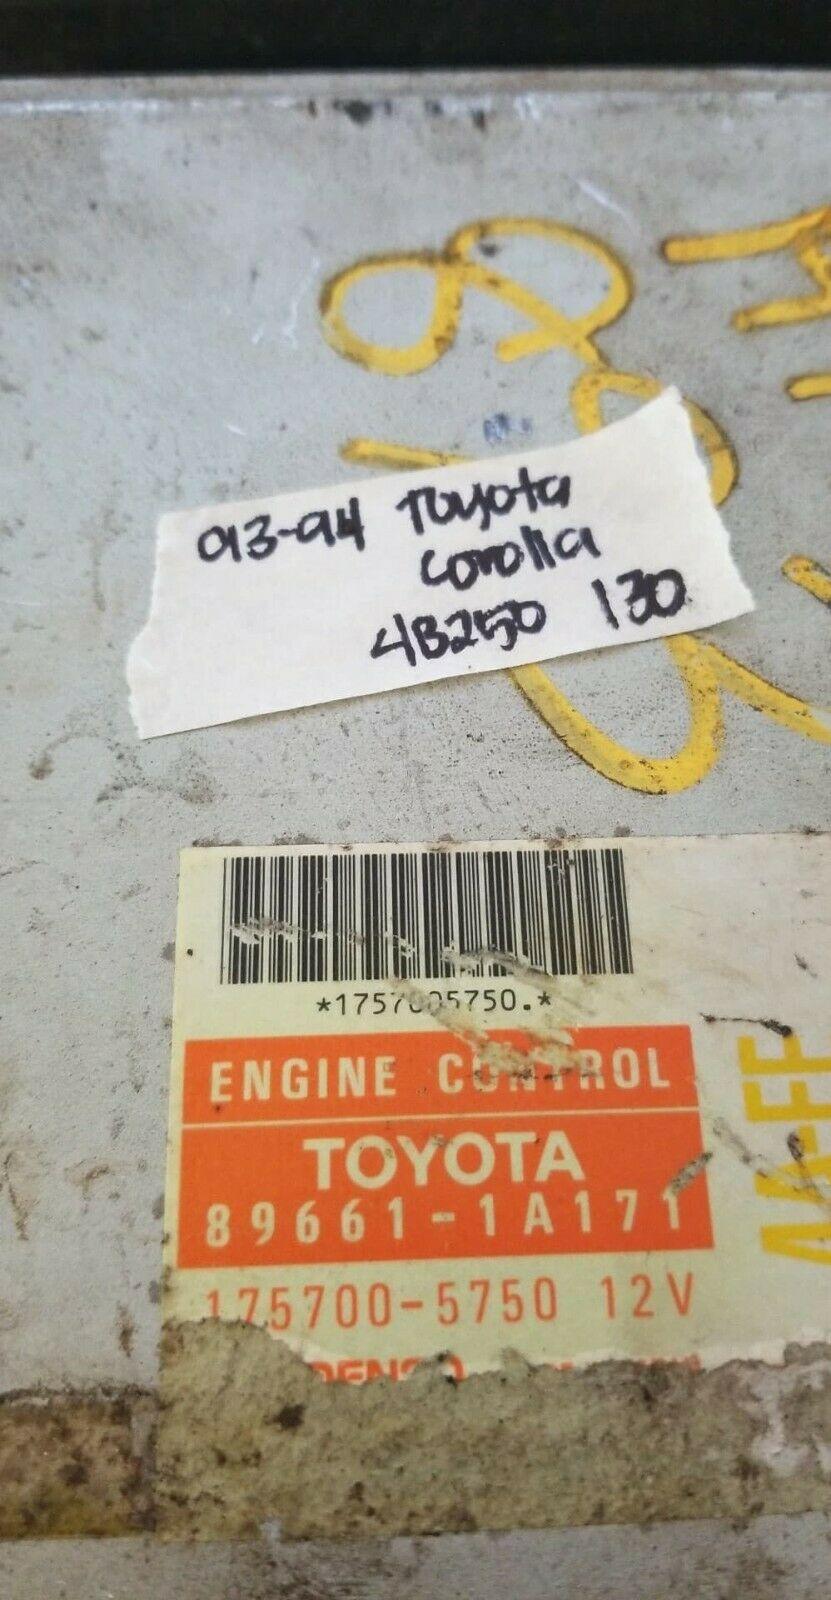 1993-1994 Toyota Corolla ecm ecu computer 89661-1A171.